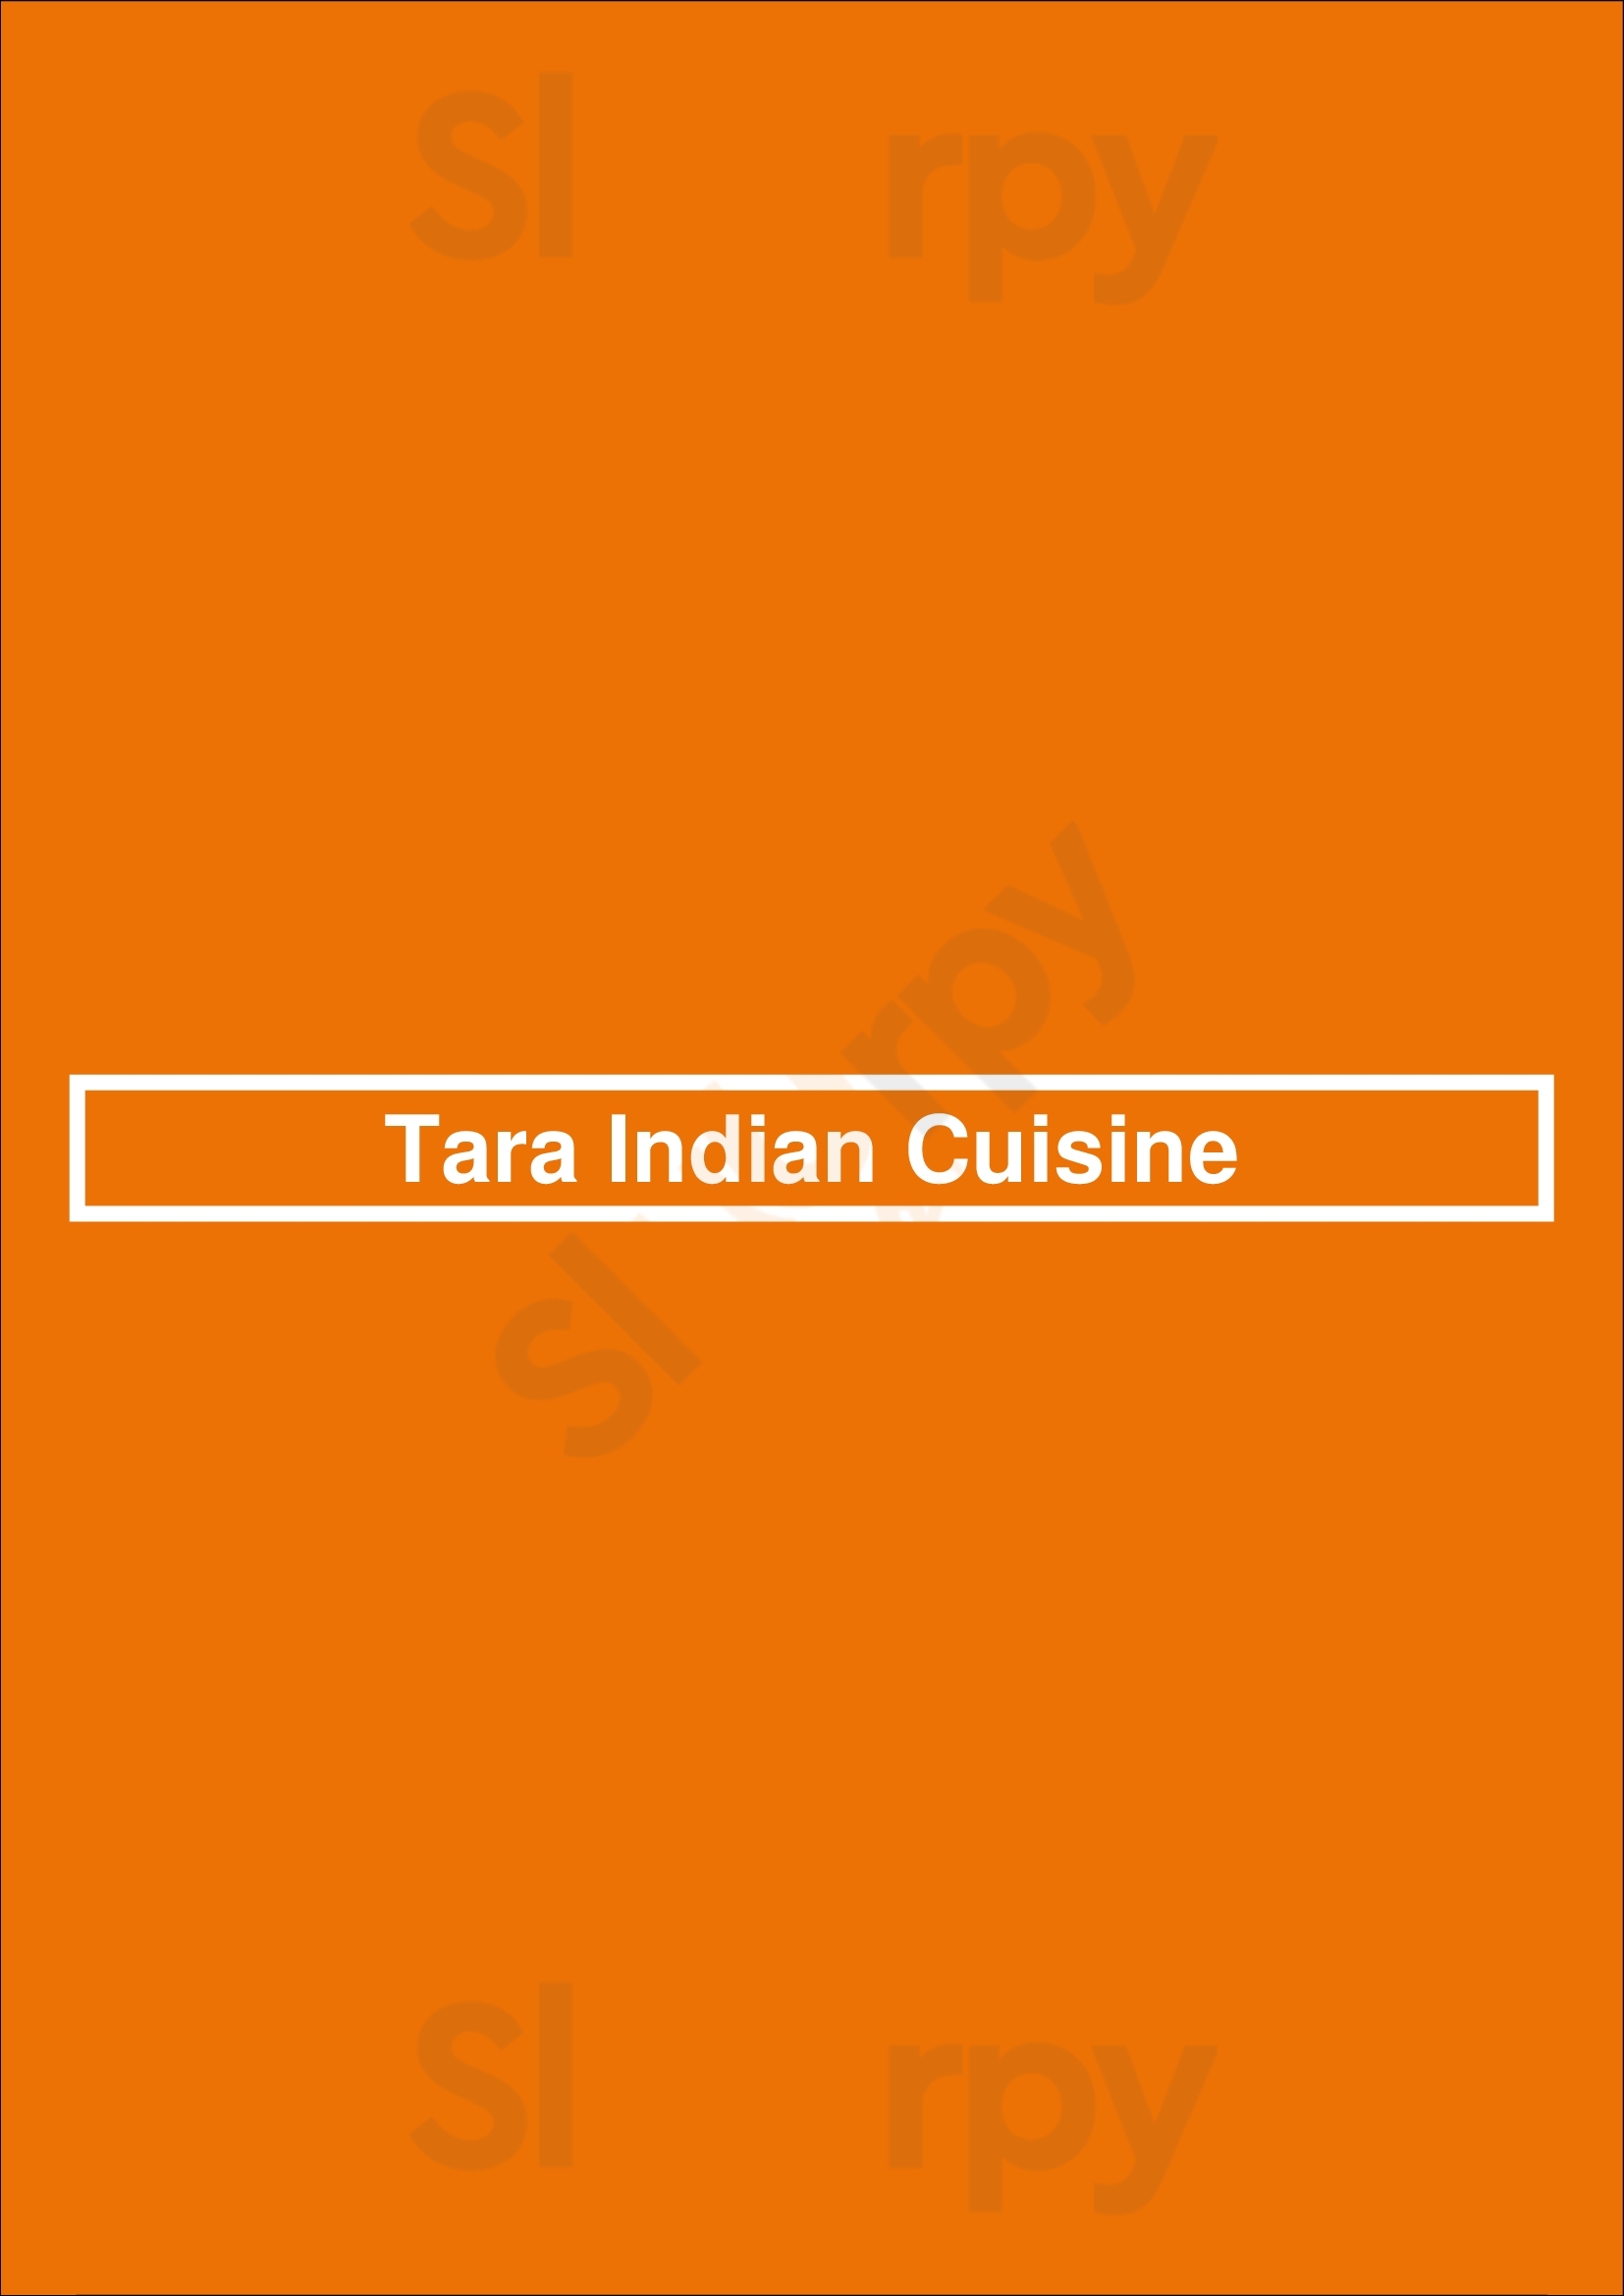 Tara Indian Cuisine San Francisco Menu - 1